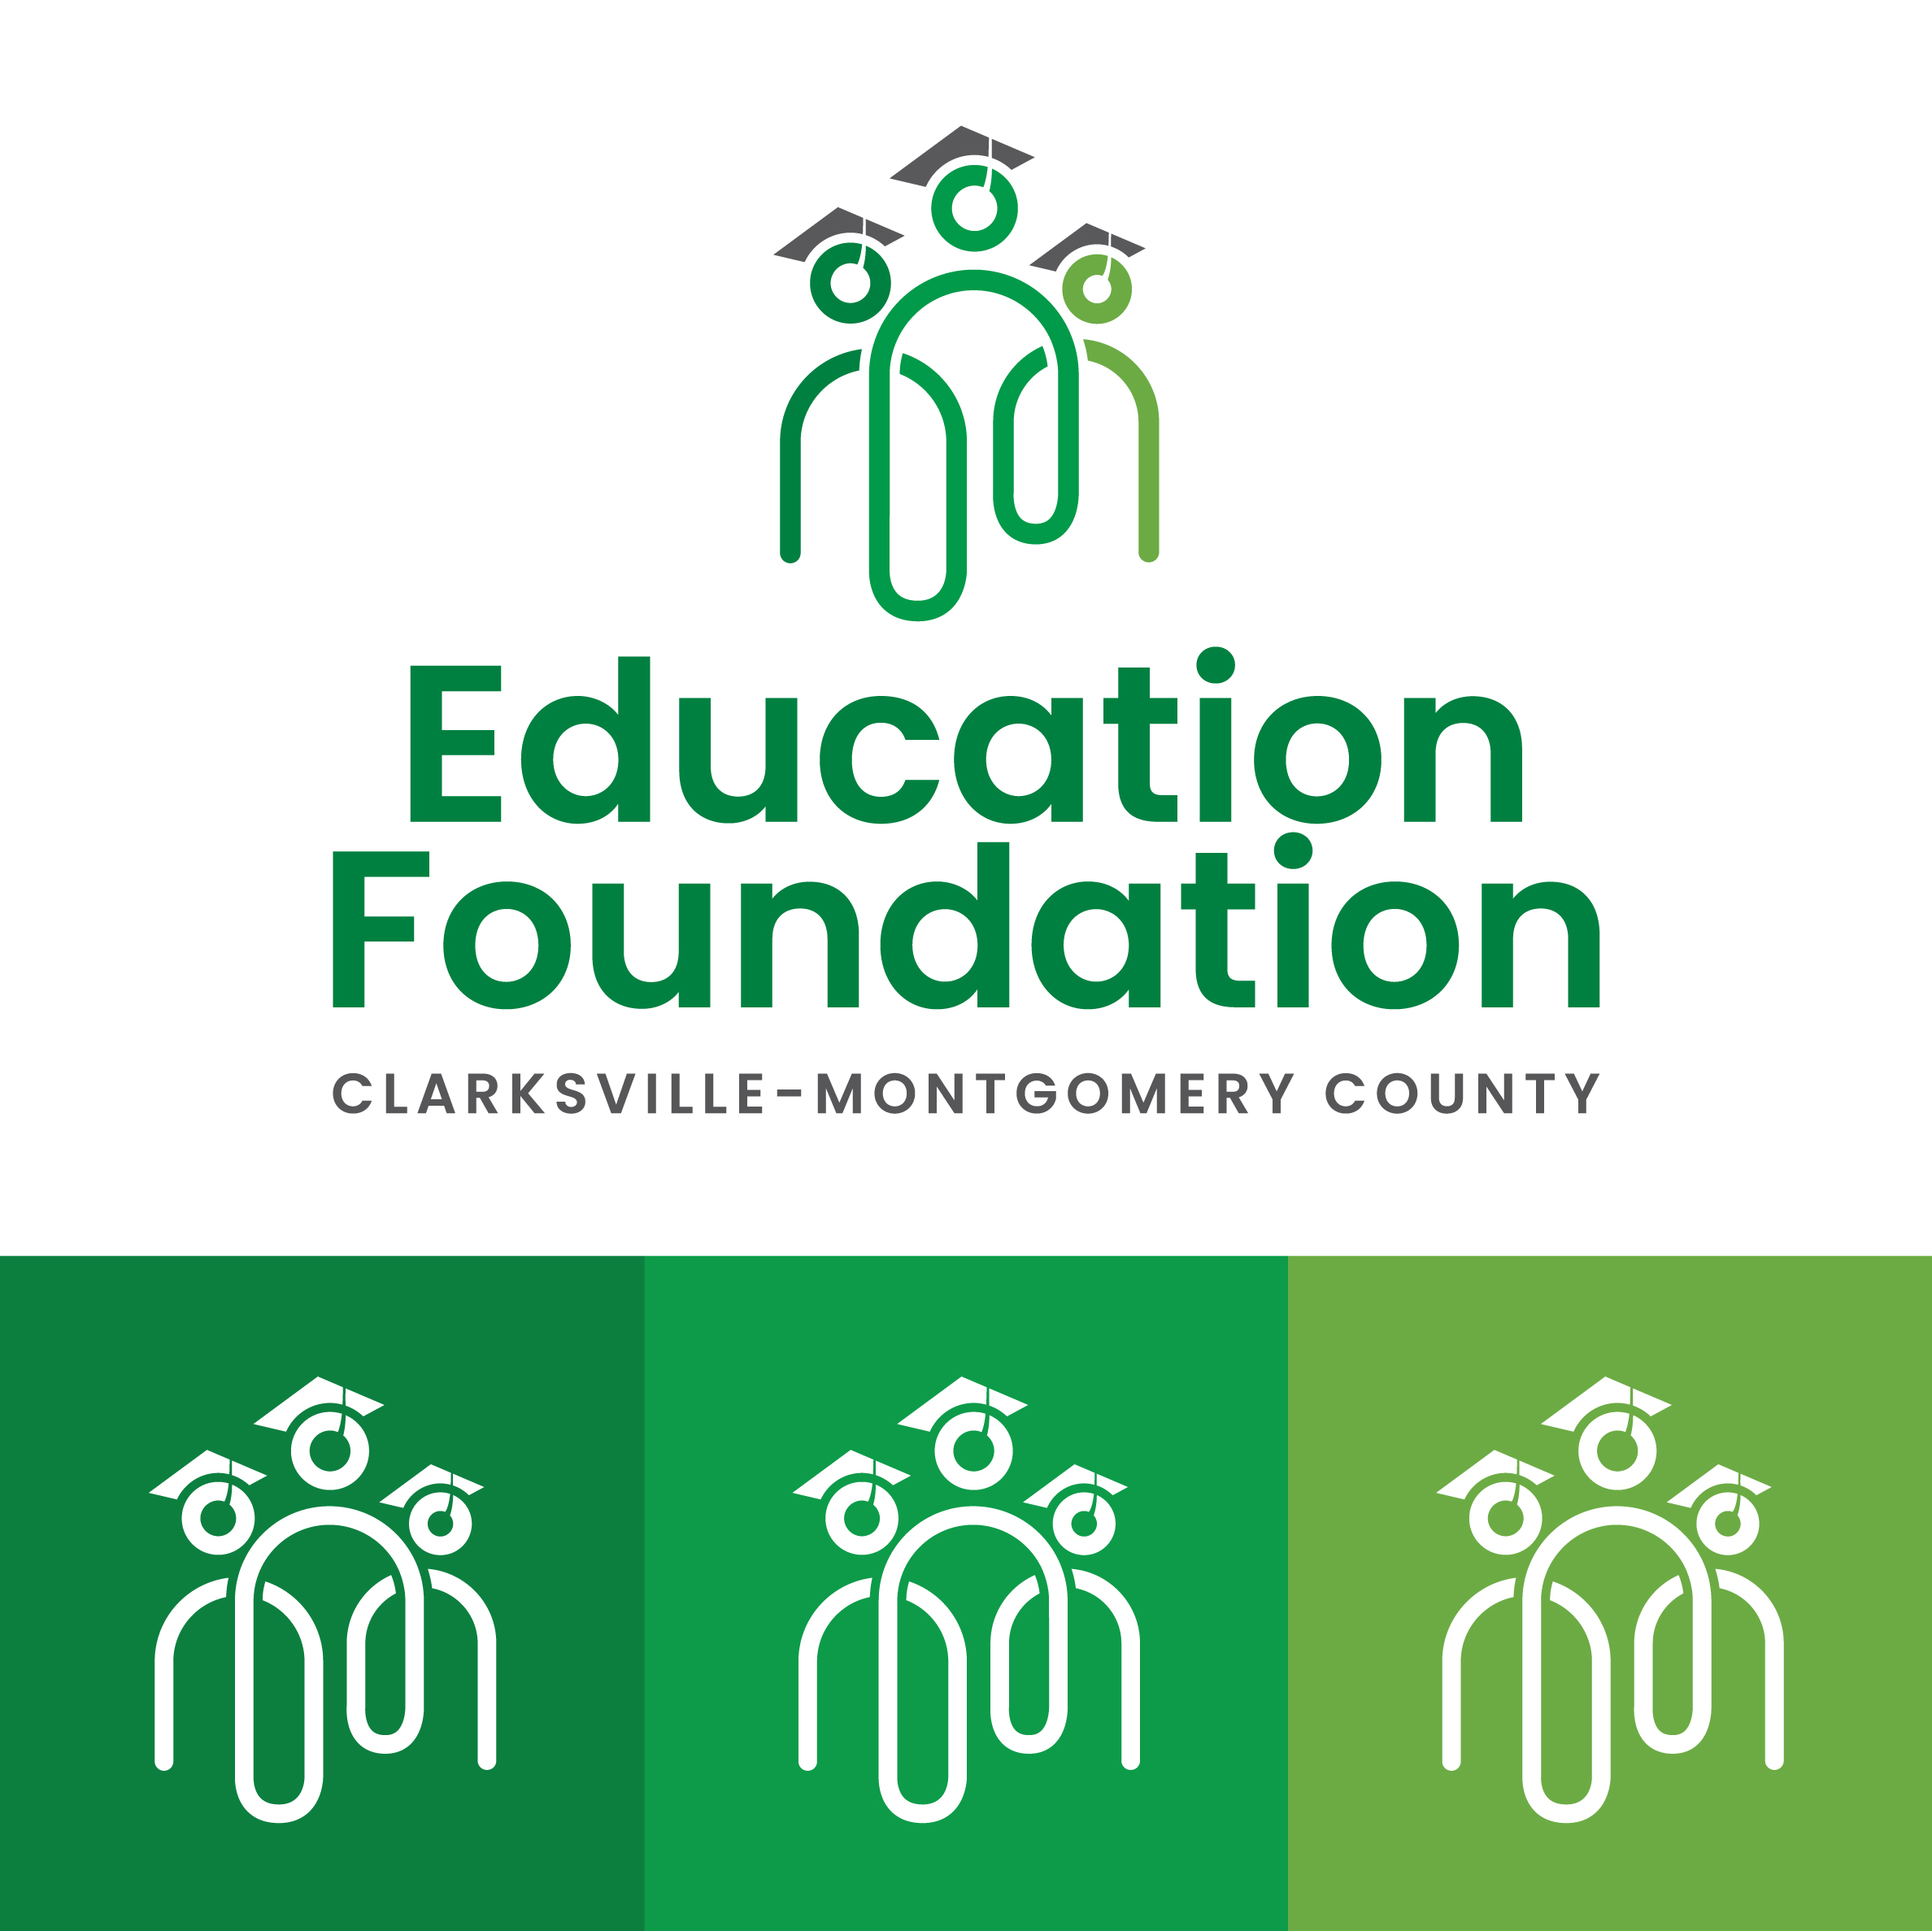 cmc-education-foundation-redesign